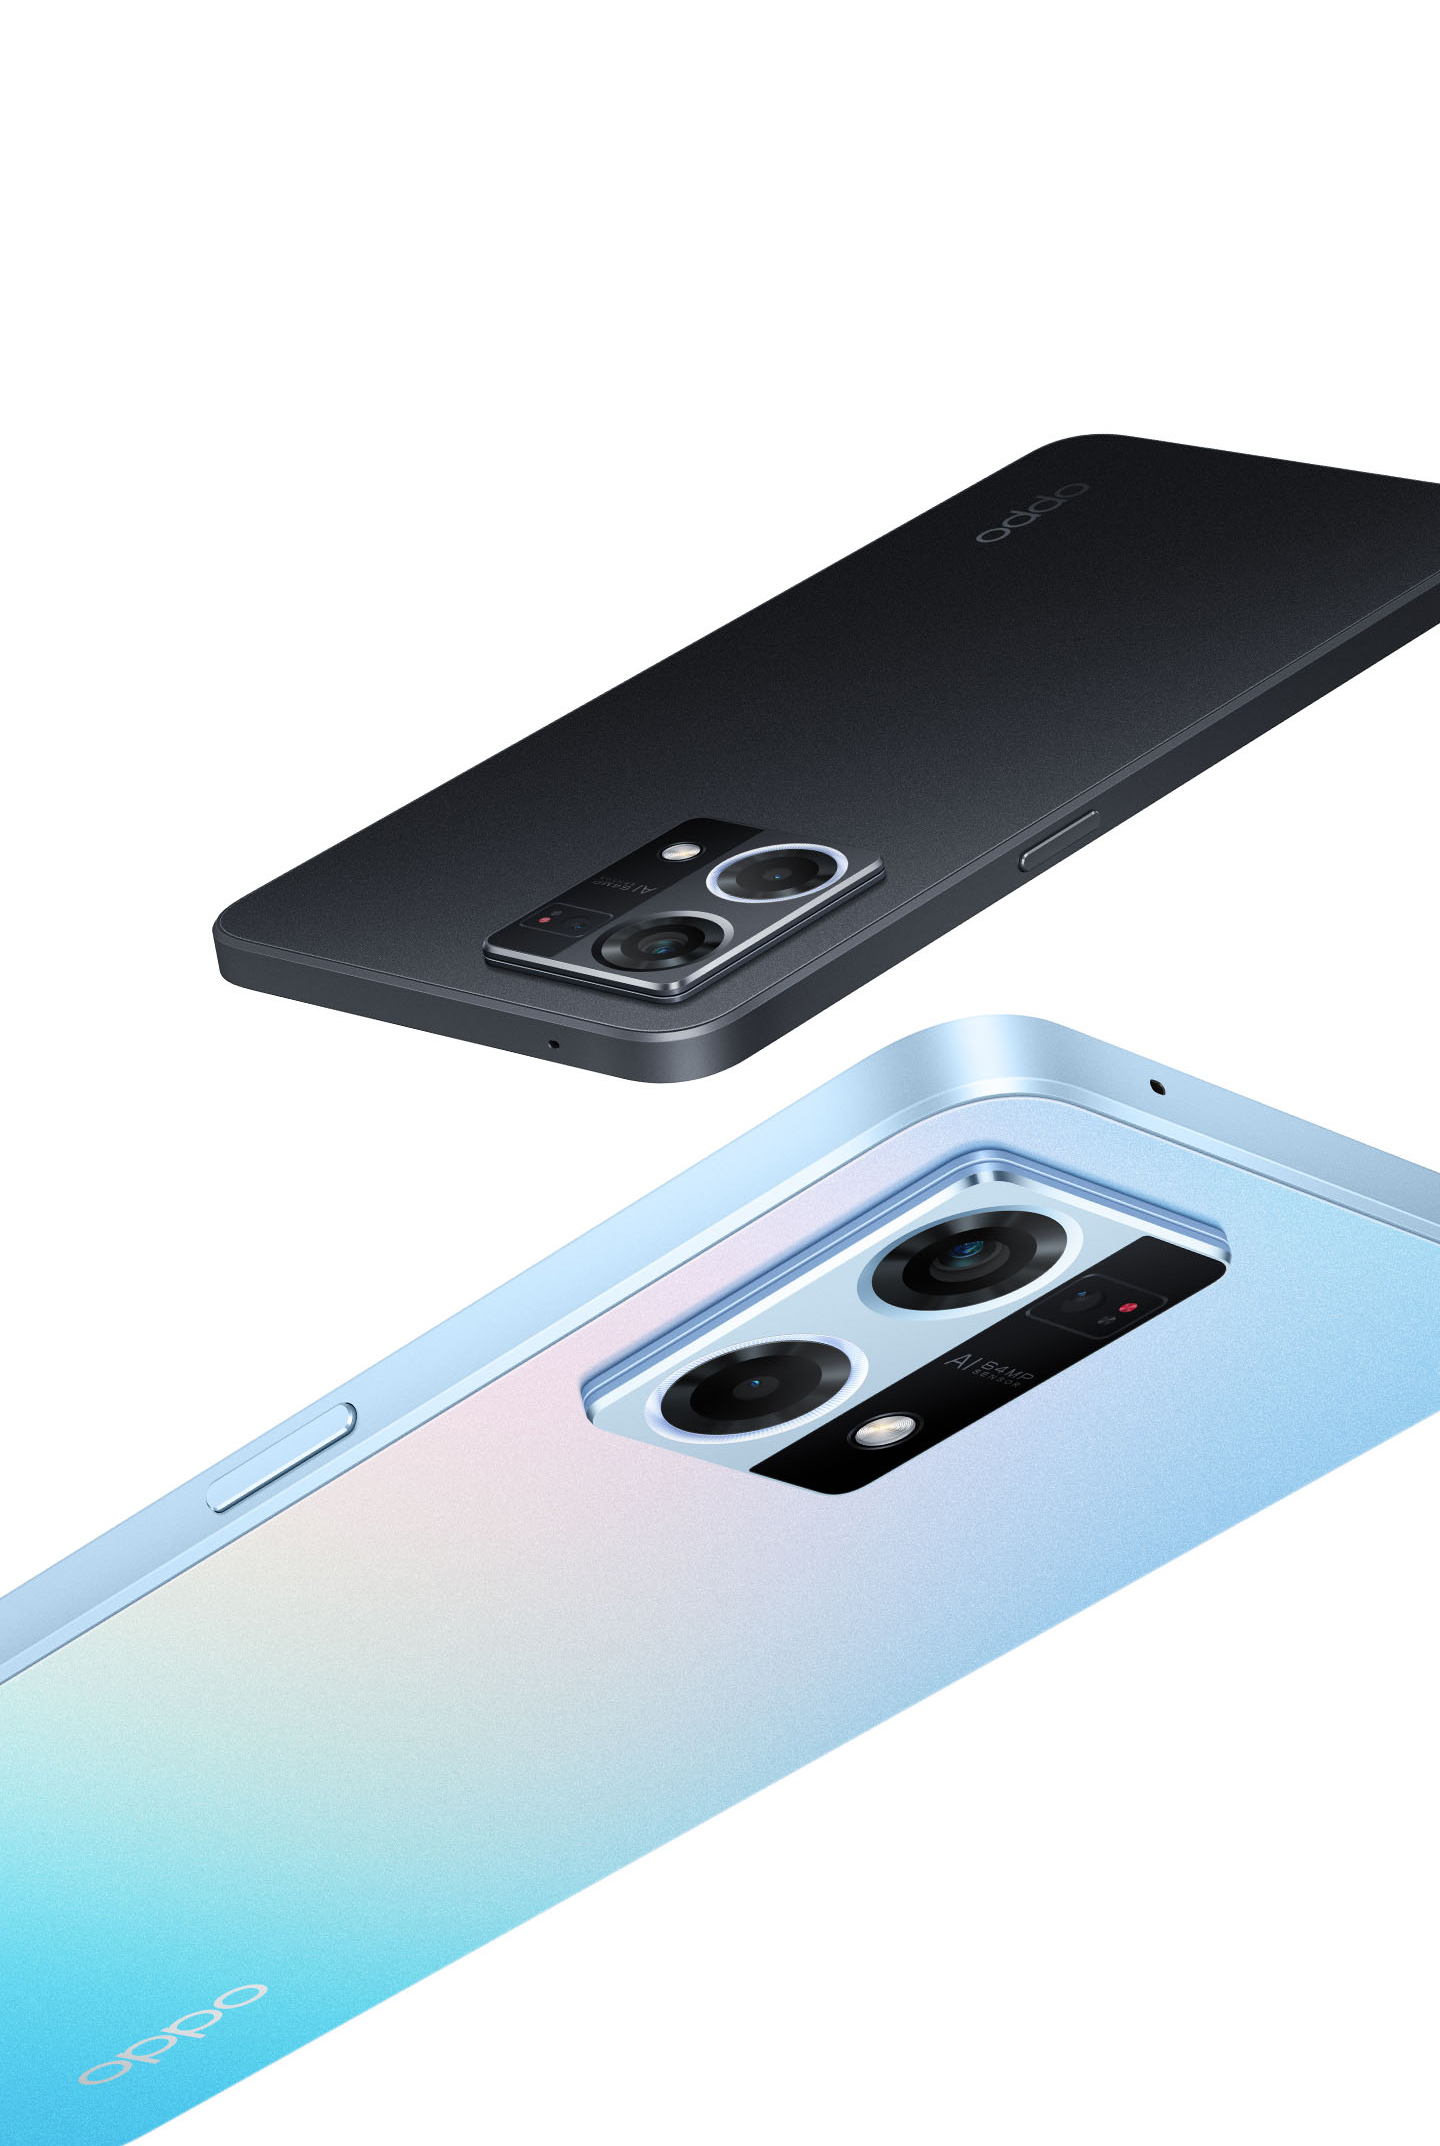 Mooov Protector Pantalla Cristal Templado 3D Marco Negro para Iphone 7/8/SE  2020